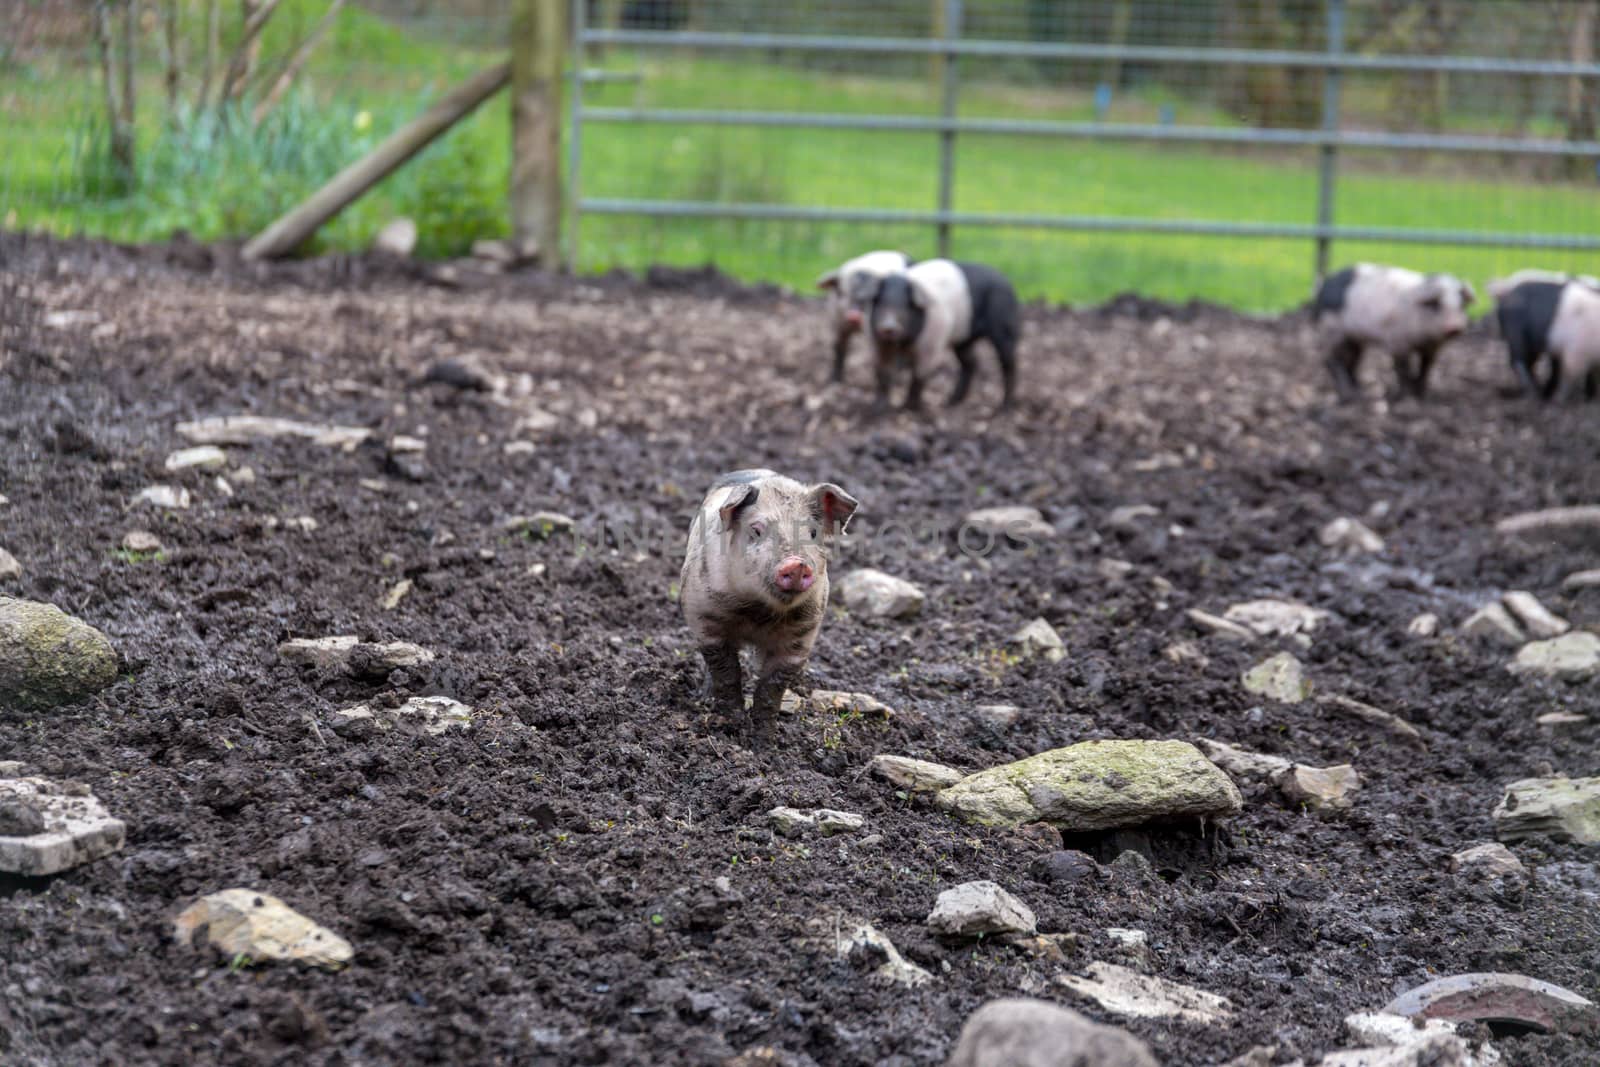 Saddleback piglets in a muddy pig pen